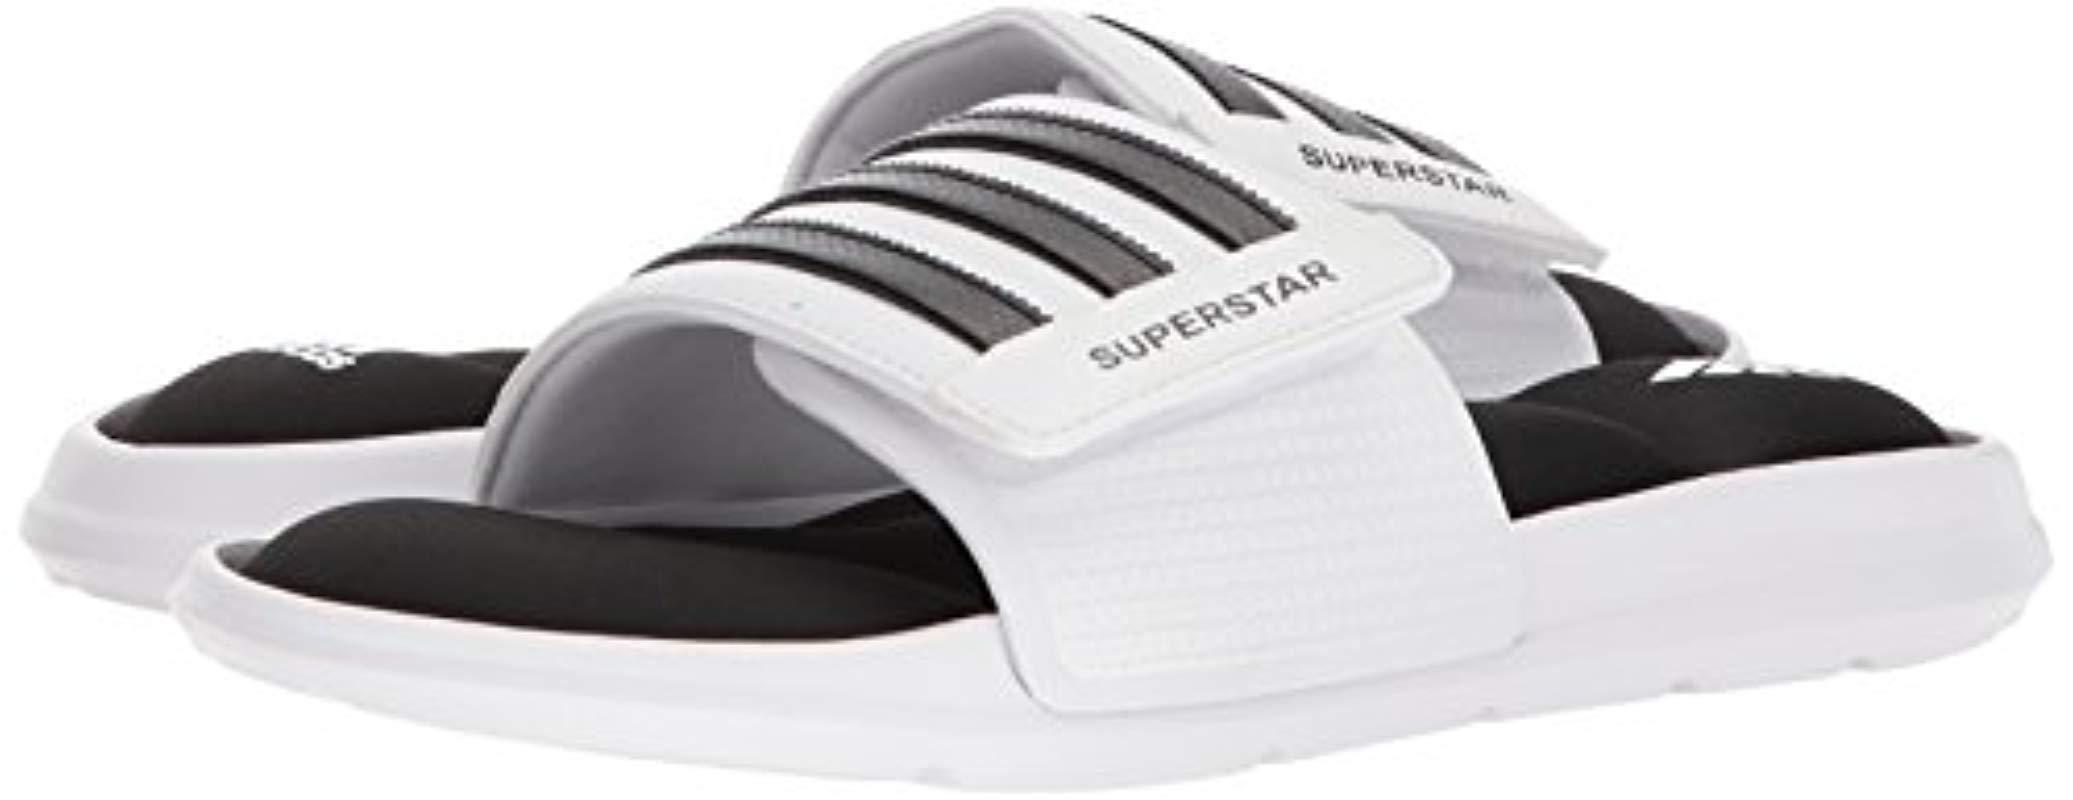 adidas Superstar 5g Slide Sandal in 